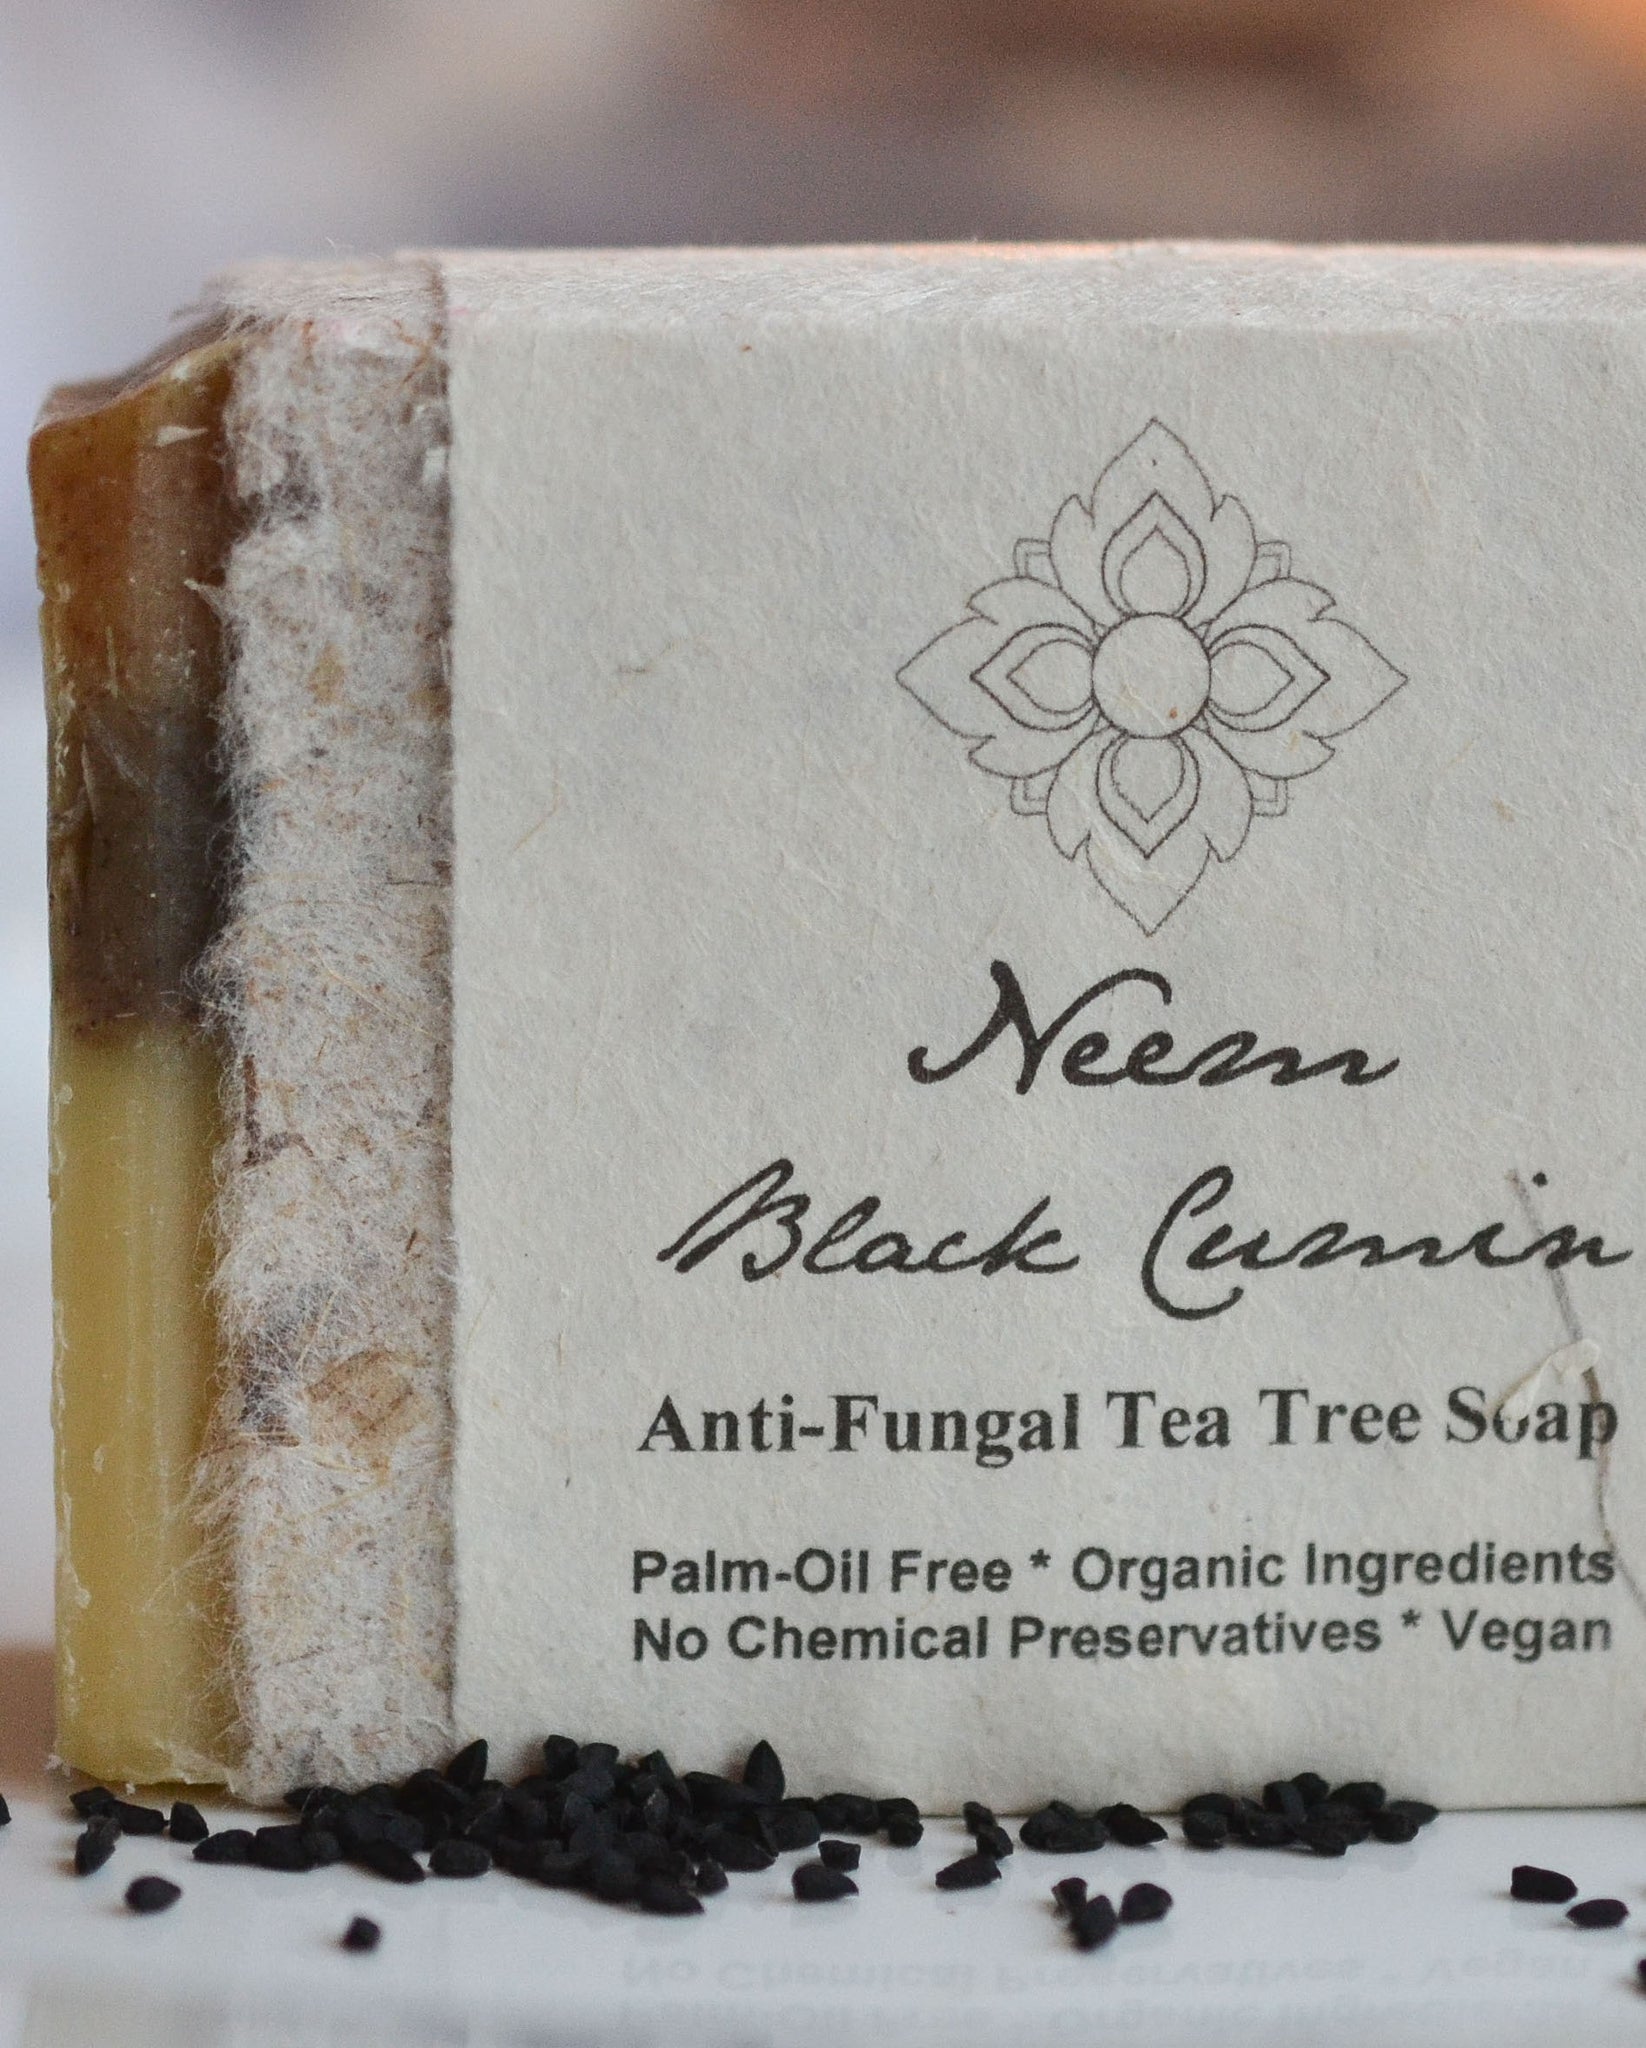 Unearth Malee Neem Black Cumin Anti-Fungal Tea Tree Organic Soap